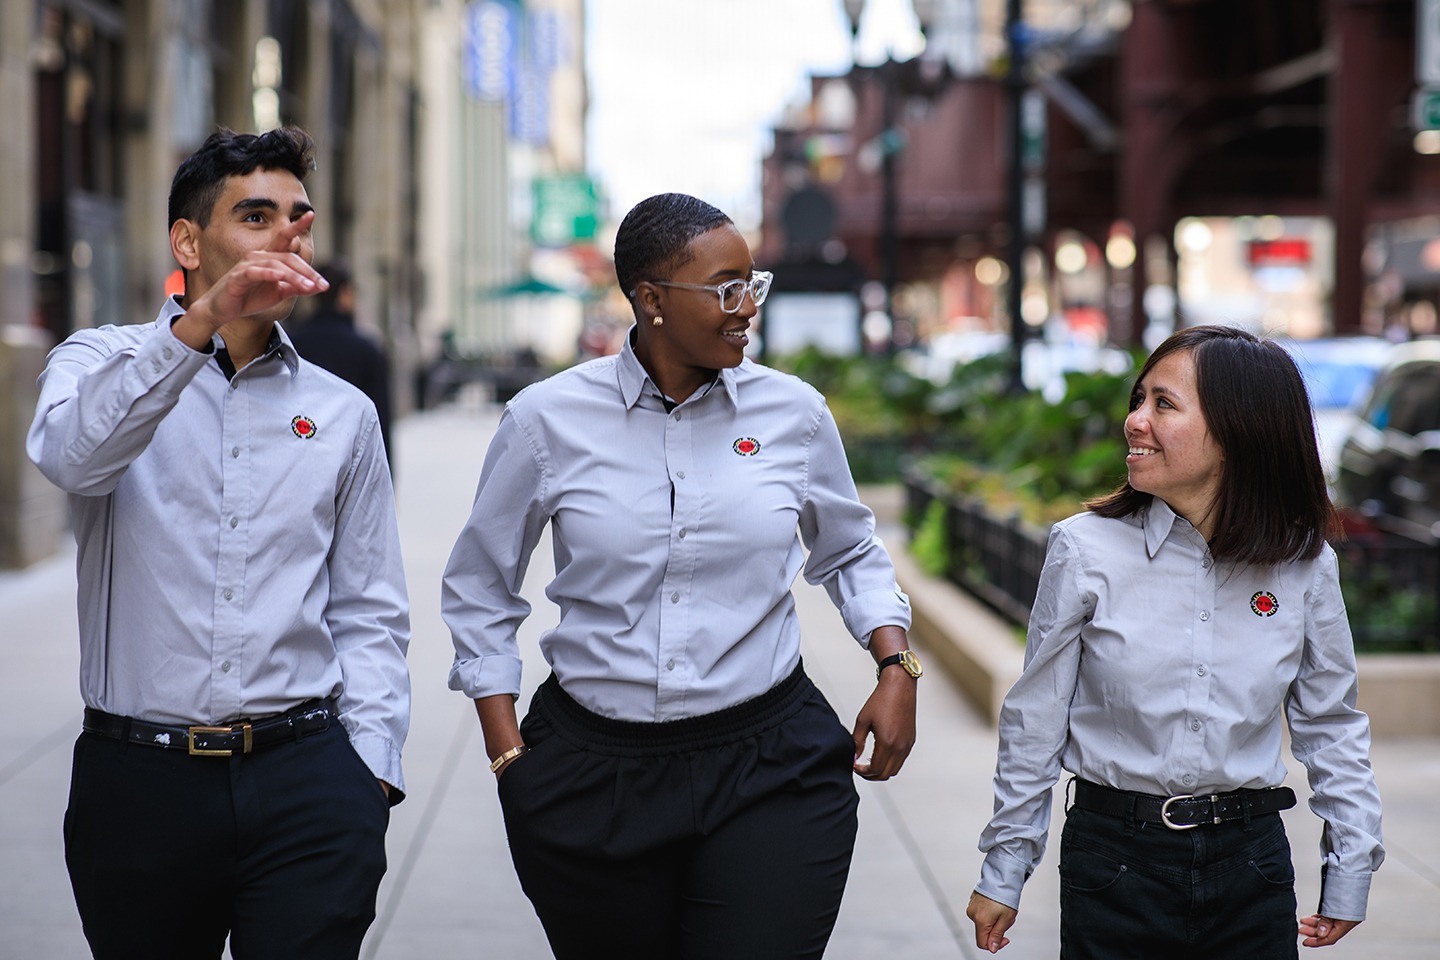 A group of AmeriCorps members walk along the city sidewalk.